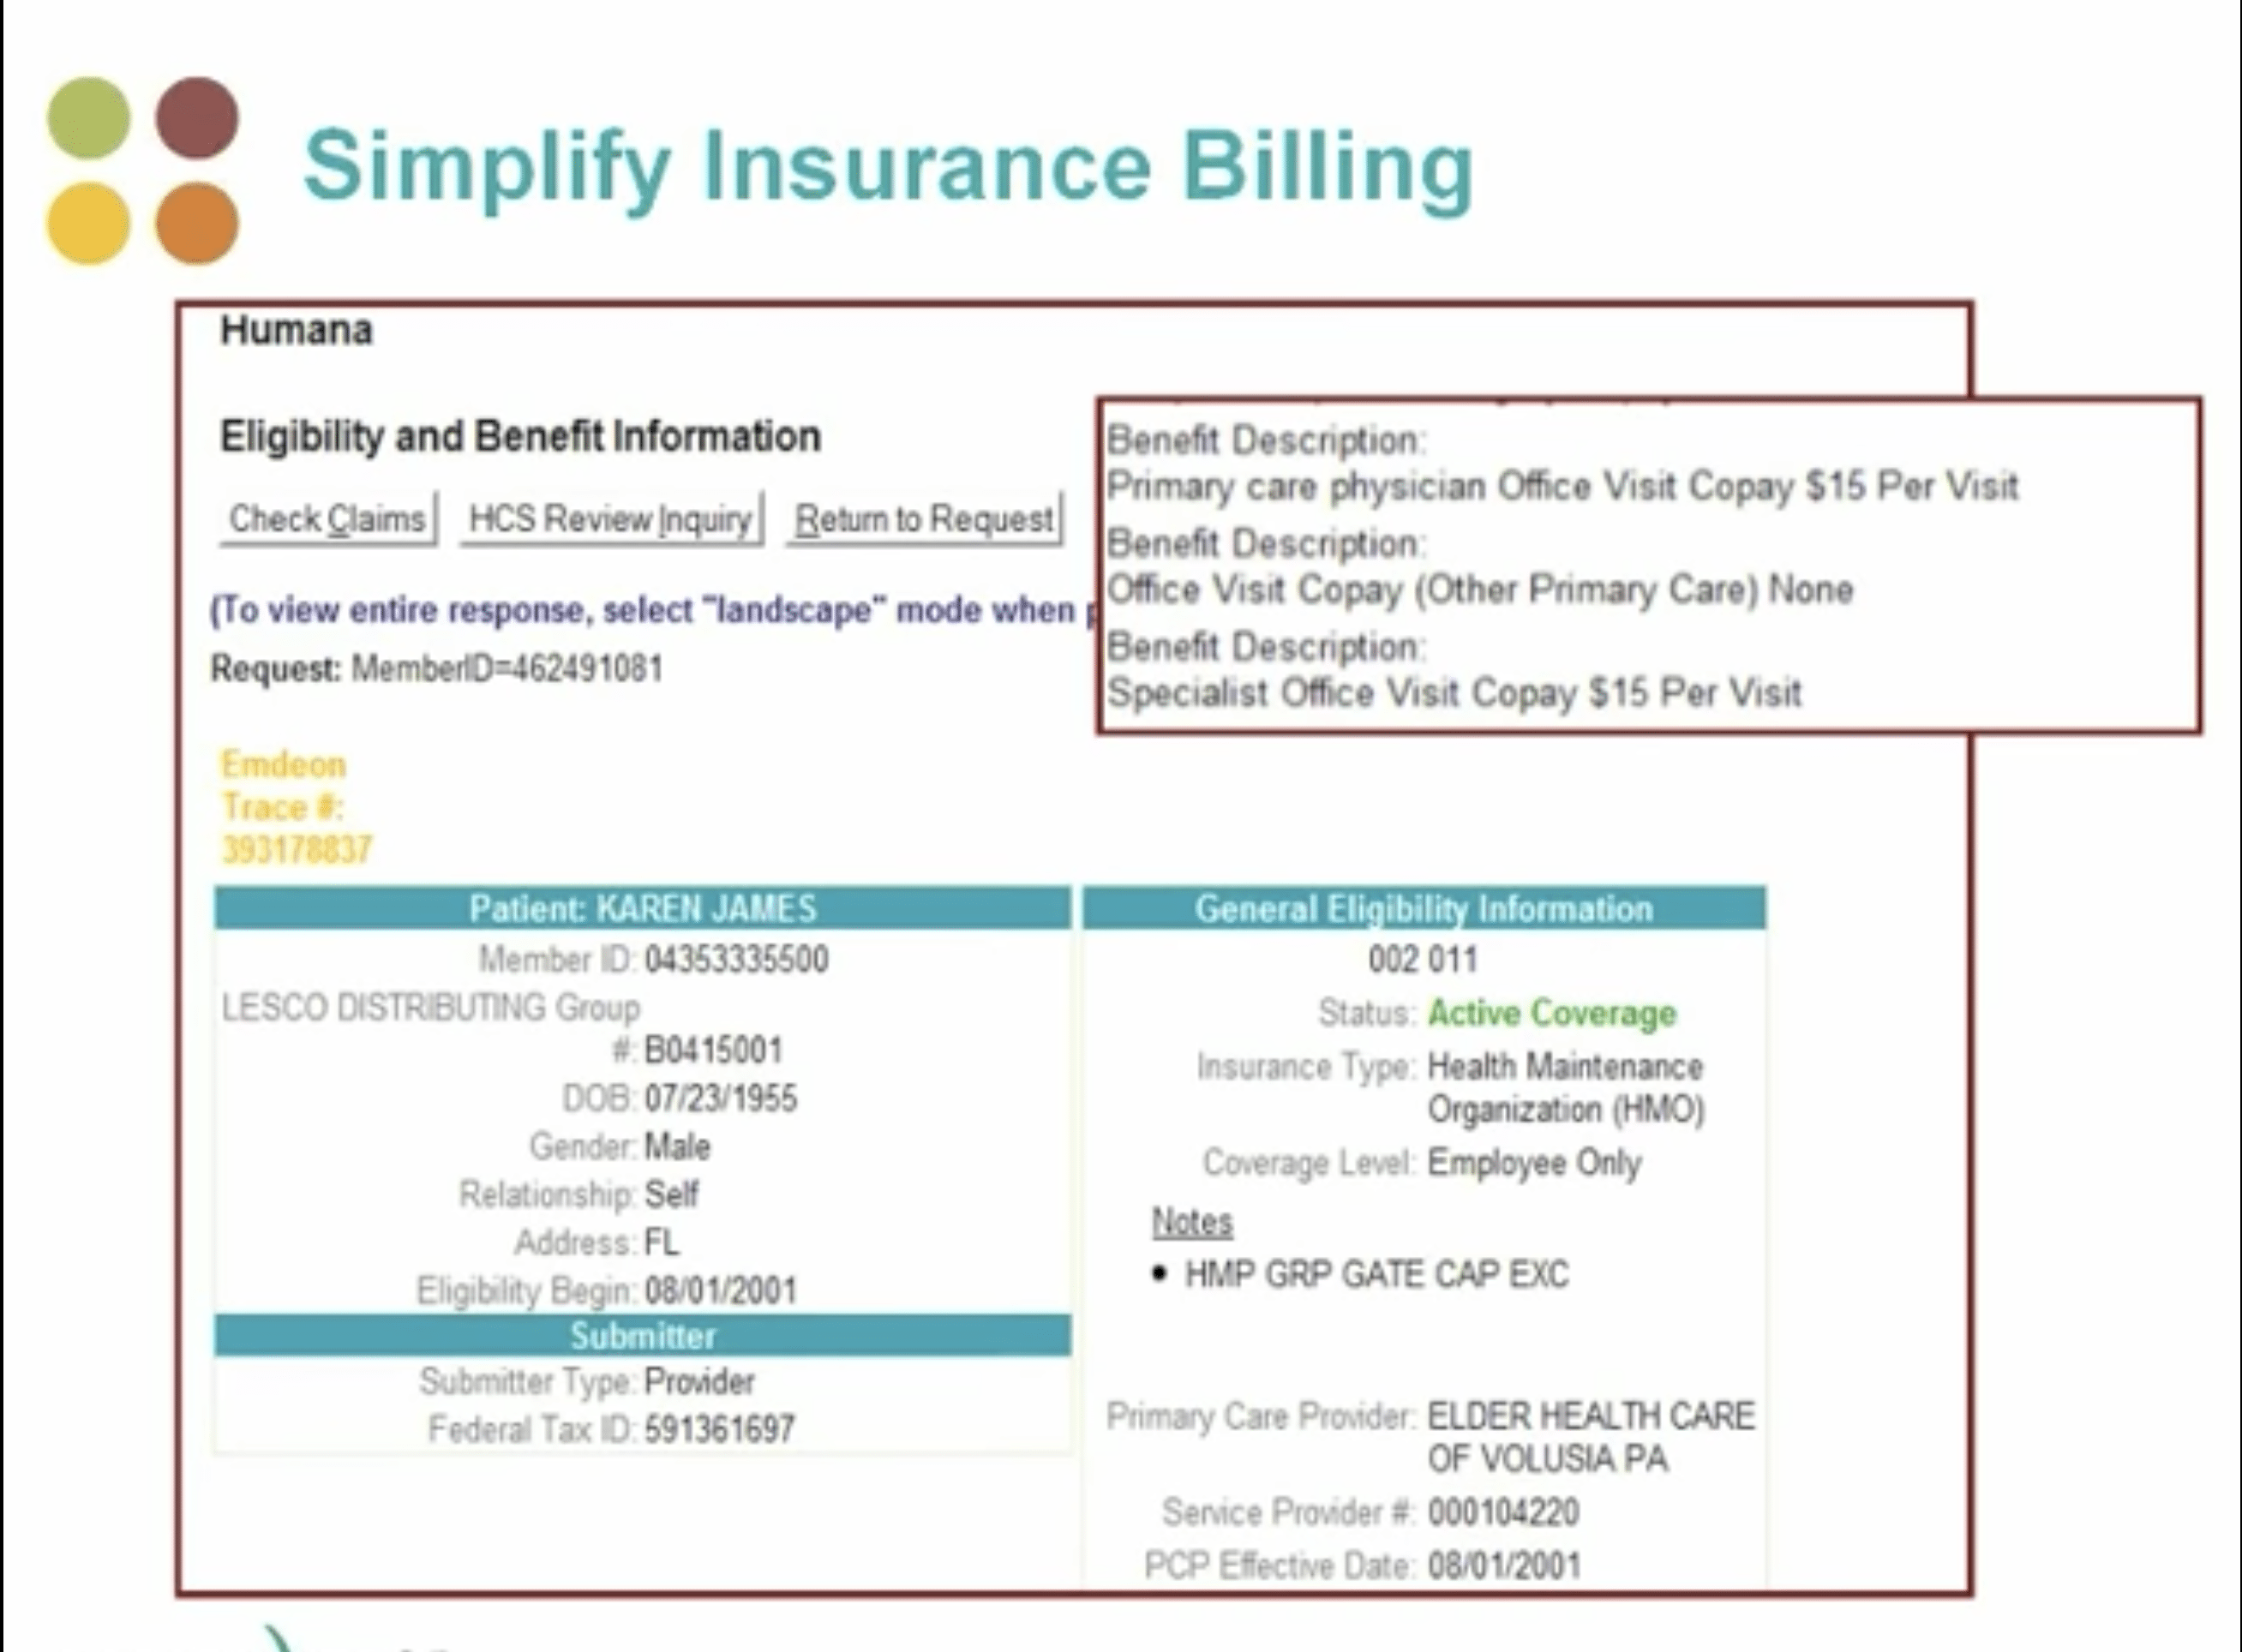 Simplify Insurance Billing